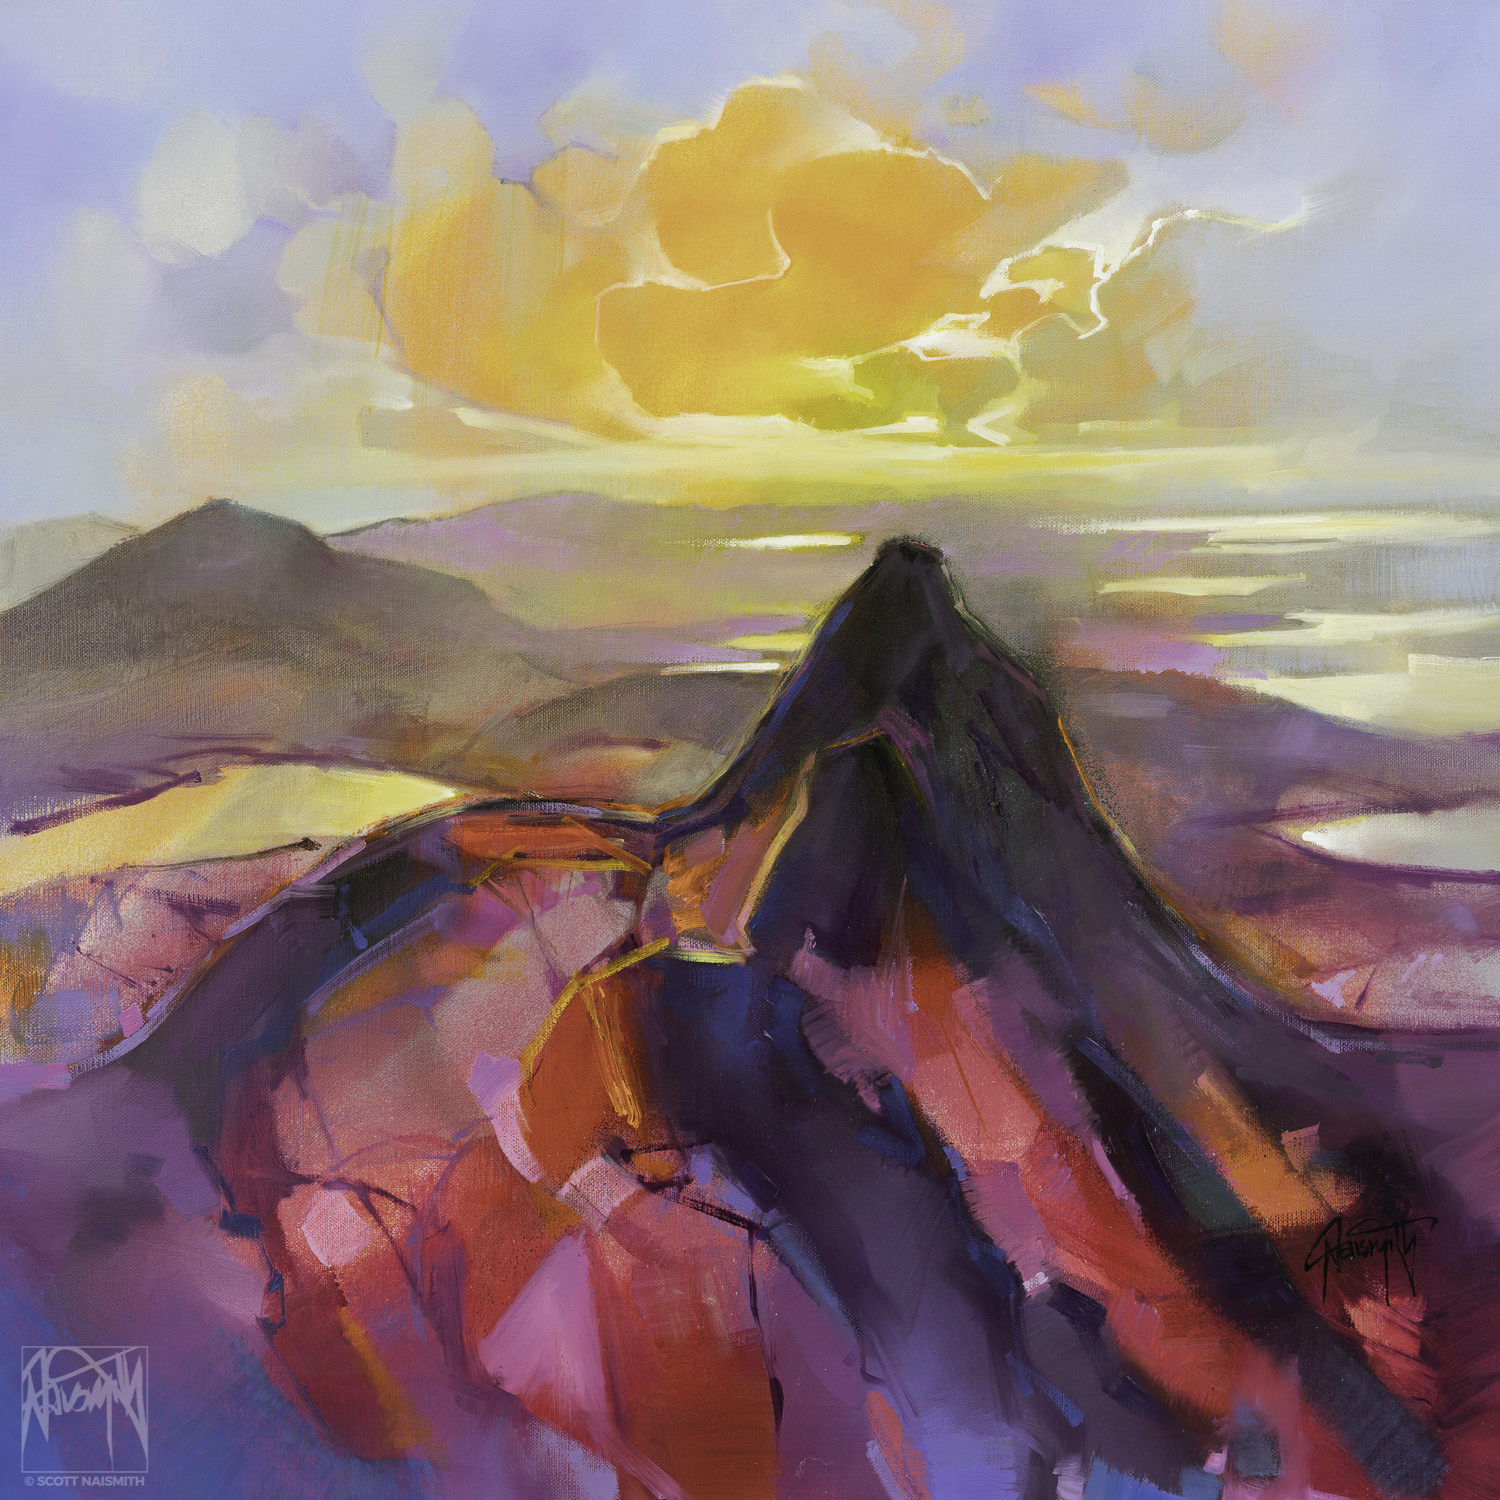 'Meta-Sunrise' by Scott Naismith